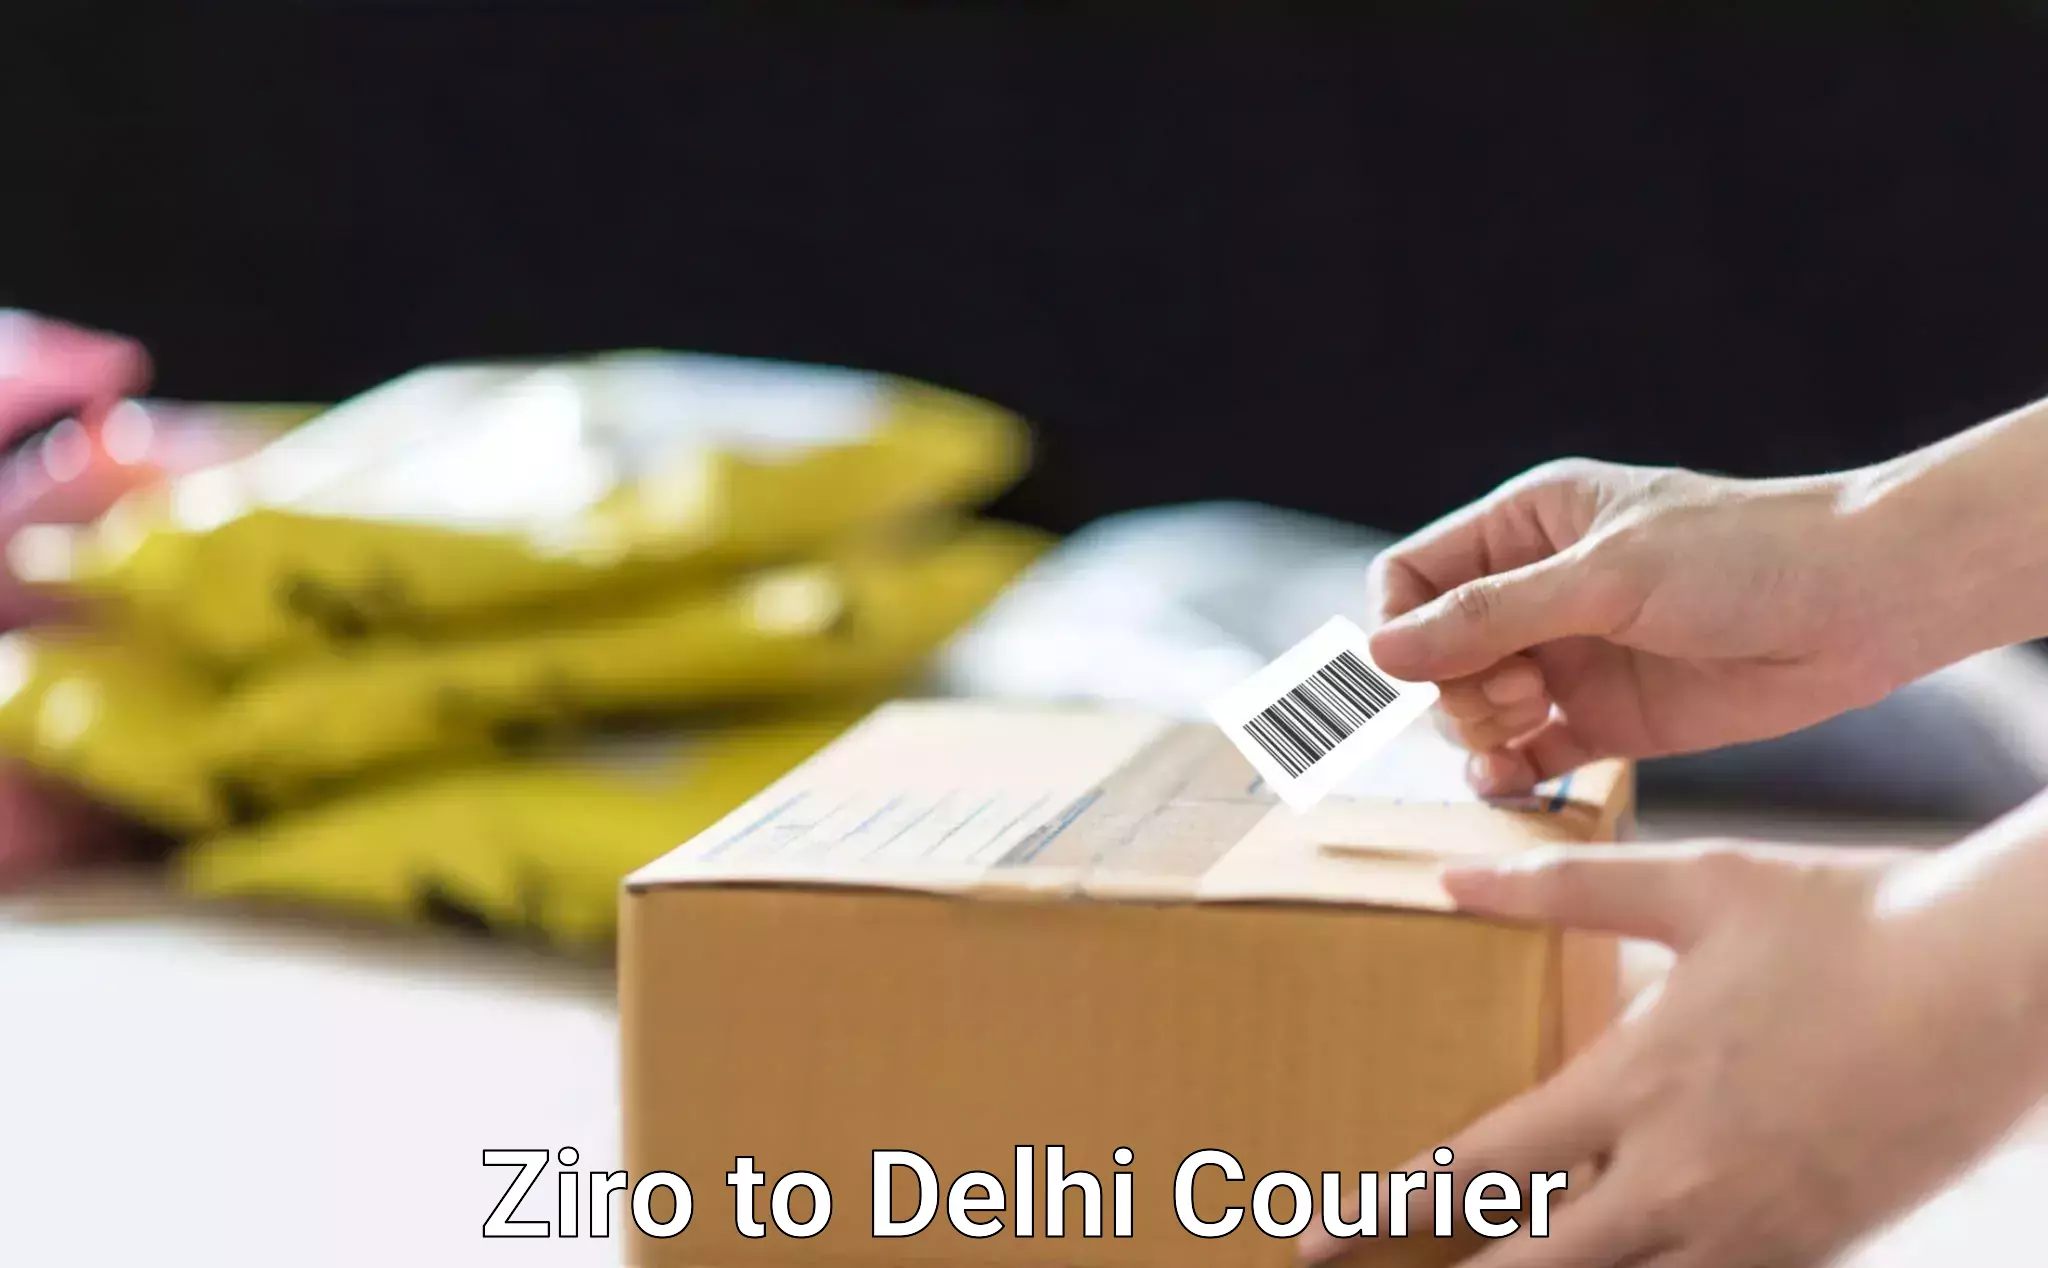 Speedy delivery service Ziro to Lodhi Road